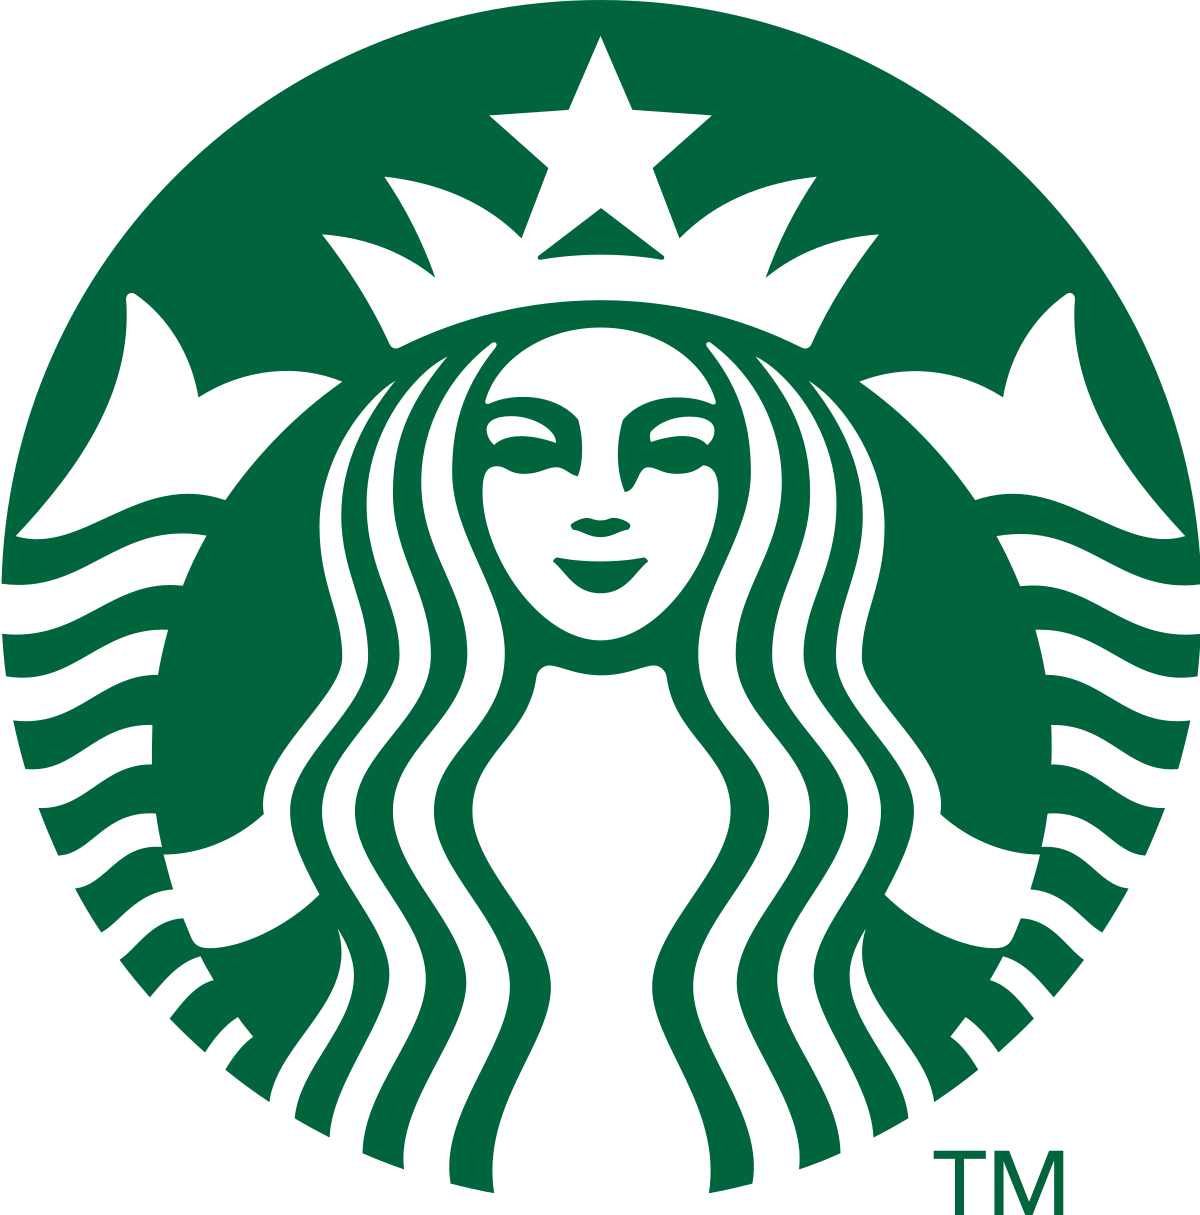 Starbucks coffee company sevstar